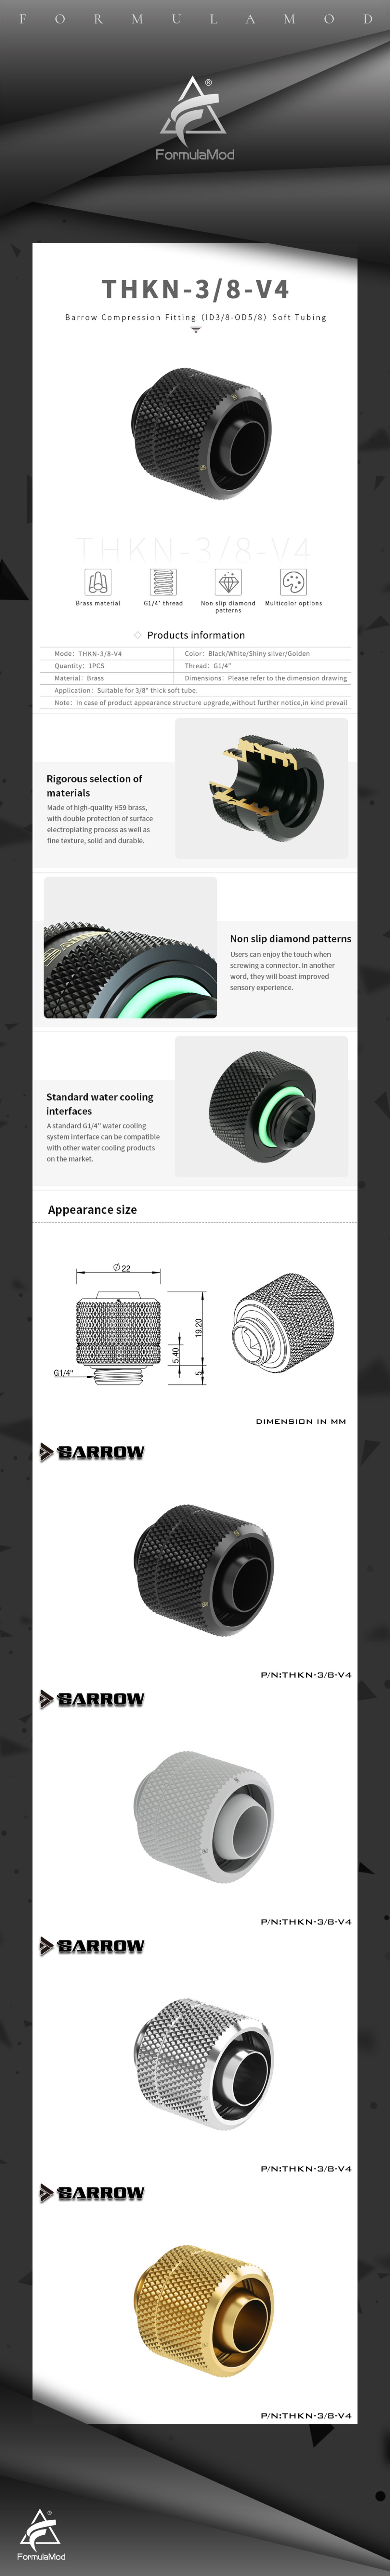 Barrow 10x13 10x16 Soft Tube Fitting Set, 4PCS/8PCS 3/8"ID*1/2"OD 3/8"ID*5/8"OD Compression Connector, Water Cooling Soft Tubing Compression Adapter THKN-3/8-B03 THKN-3/8-V4  